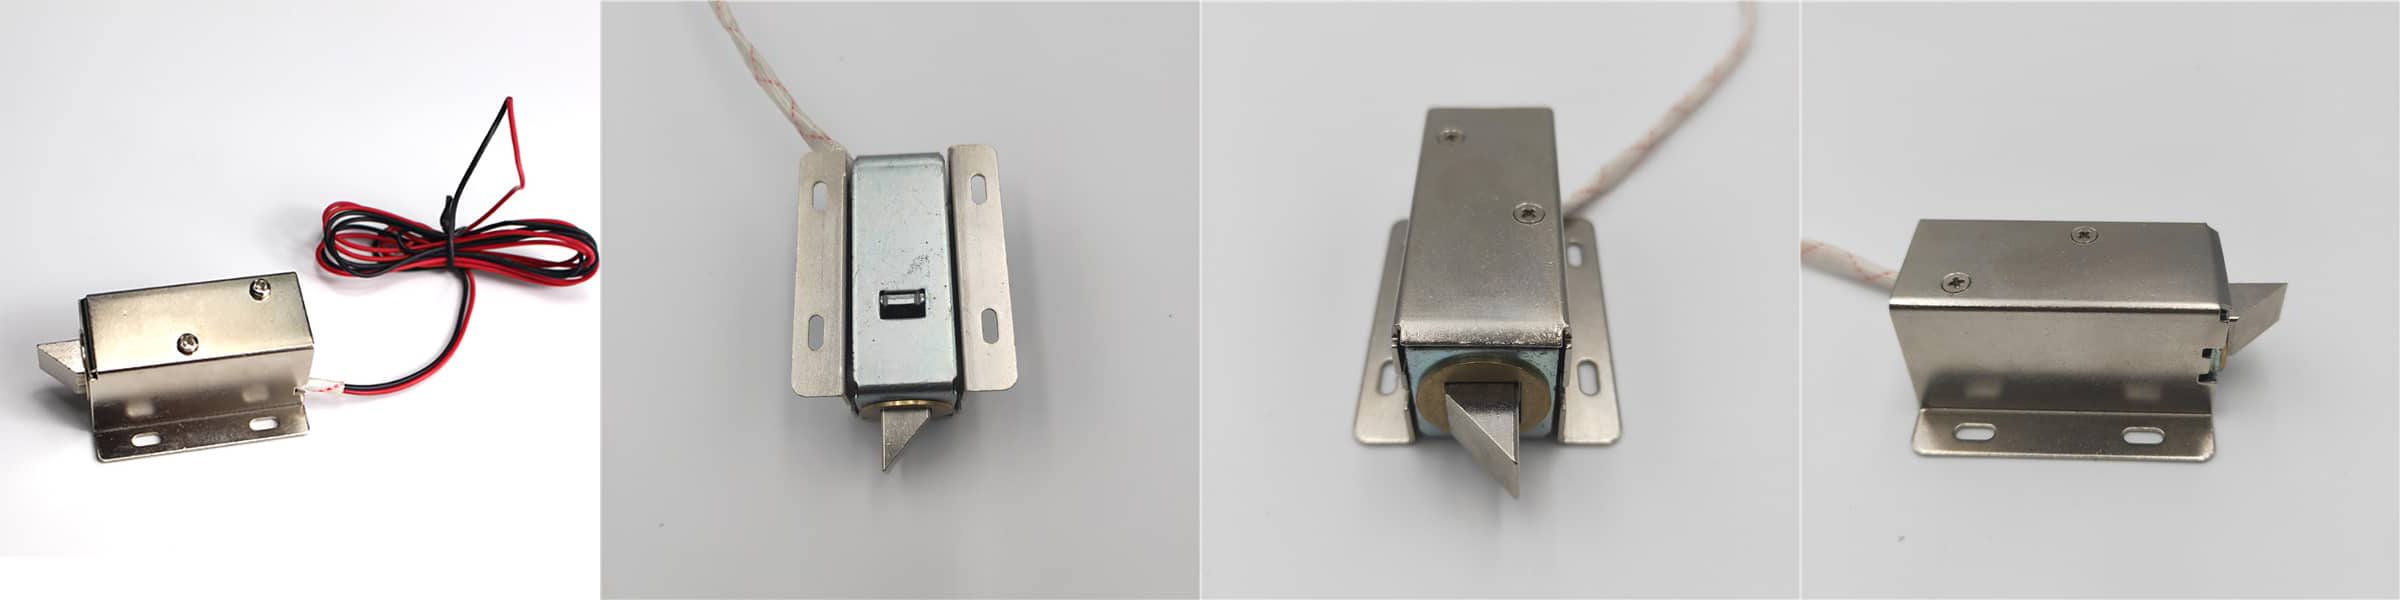 Electronic Deposit package Cabinet lock